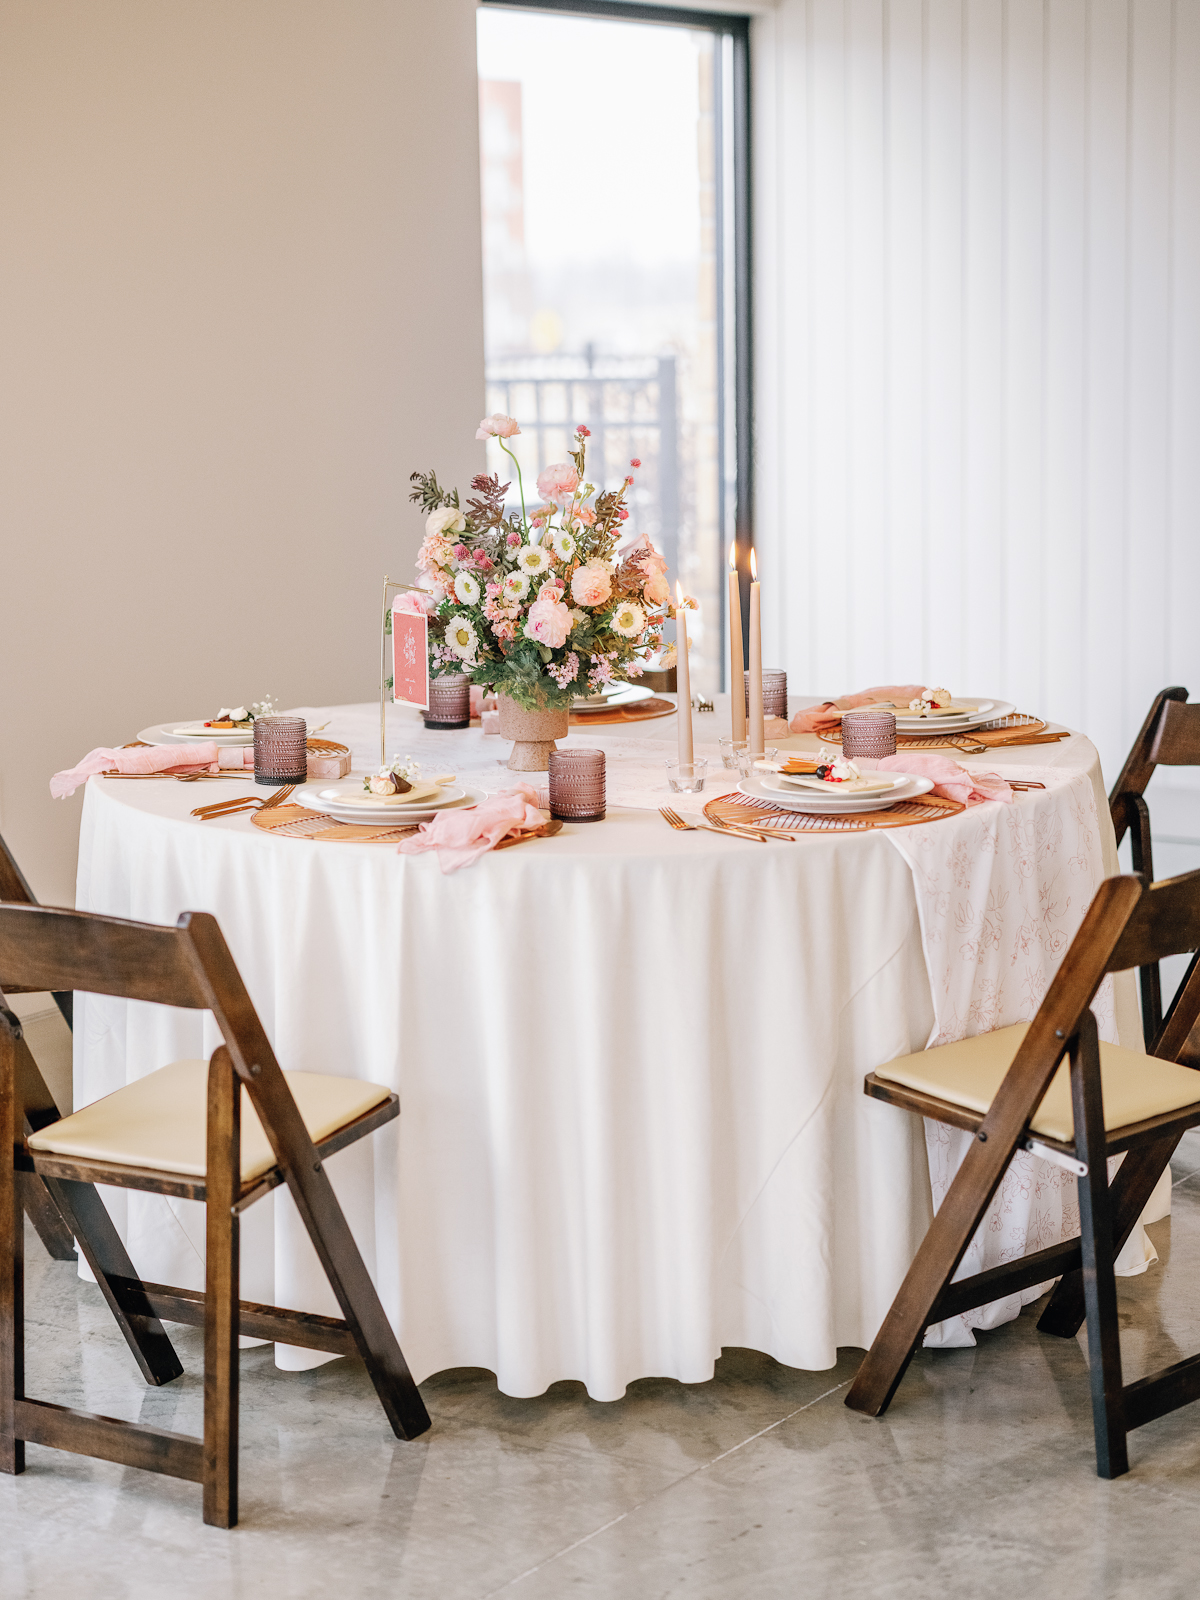 Soft, Romantic Table Setting